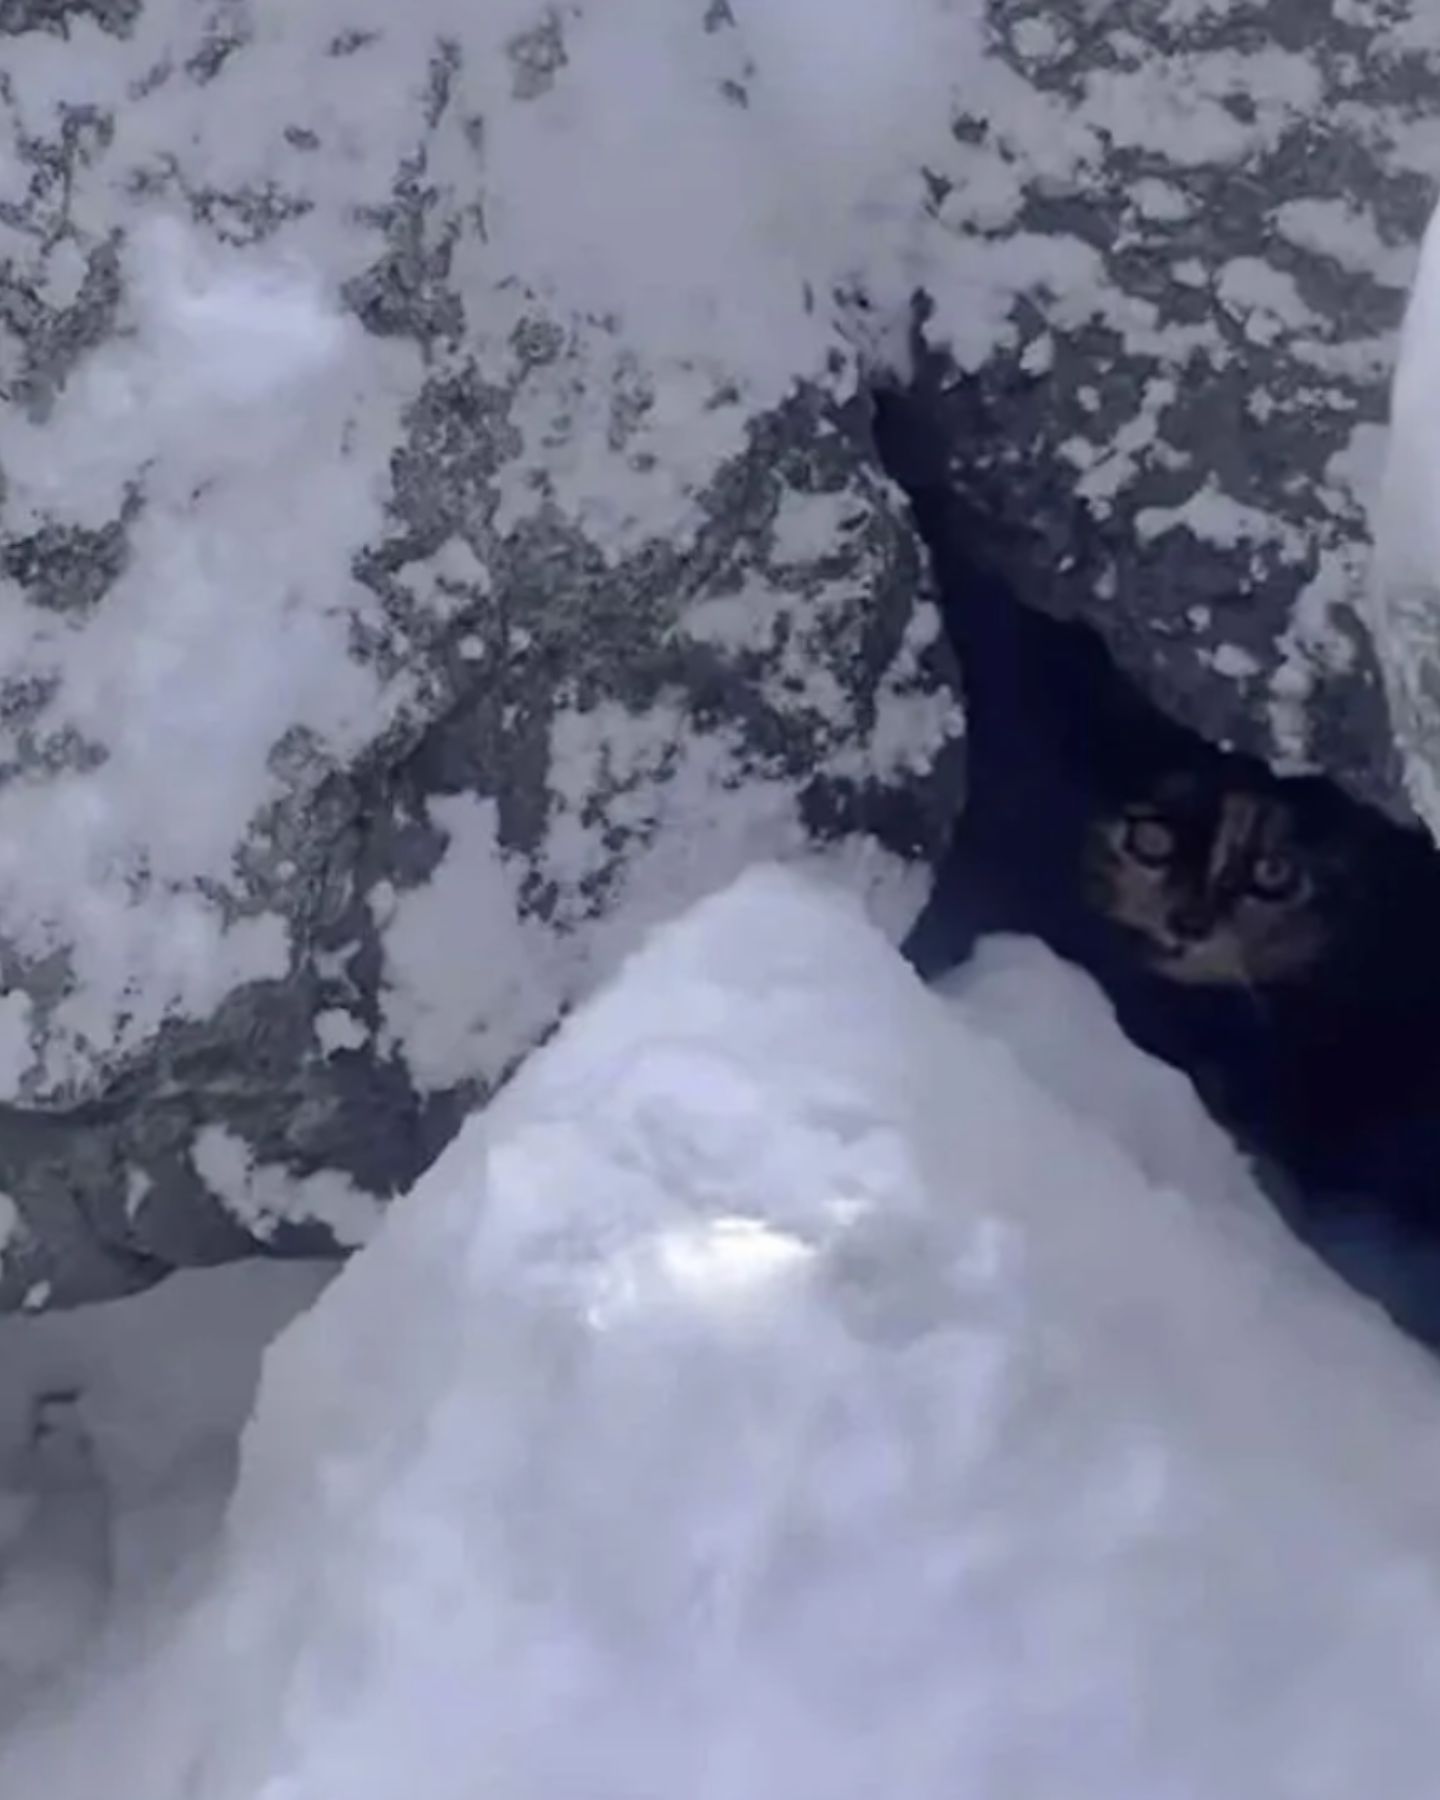 scared cat between snowy rocks